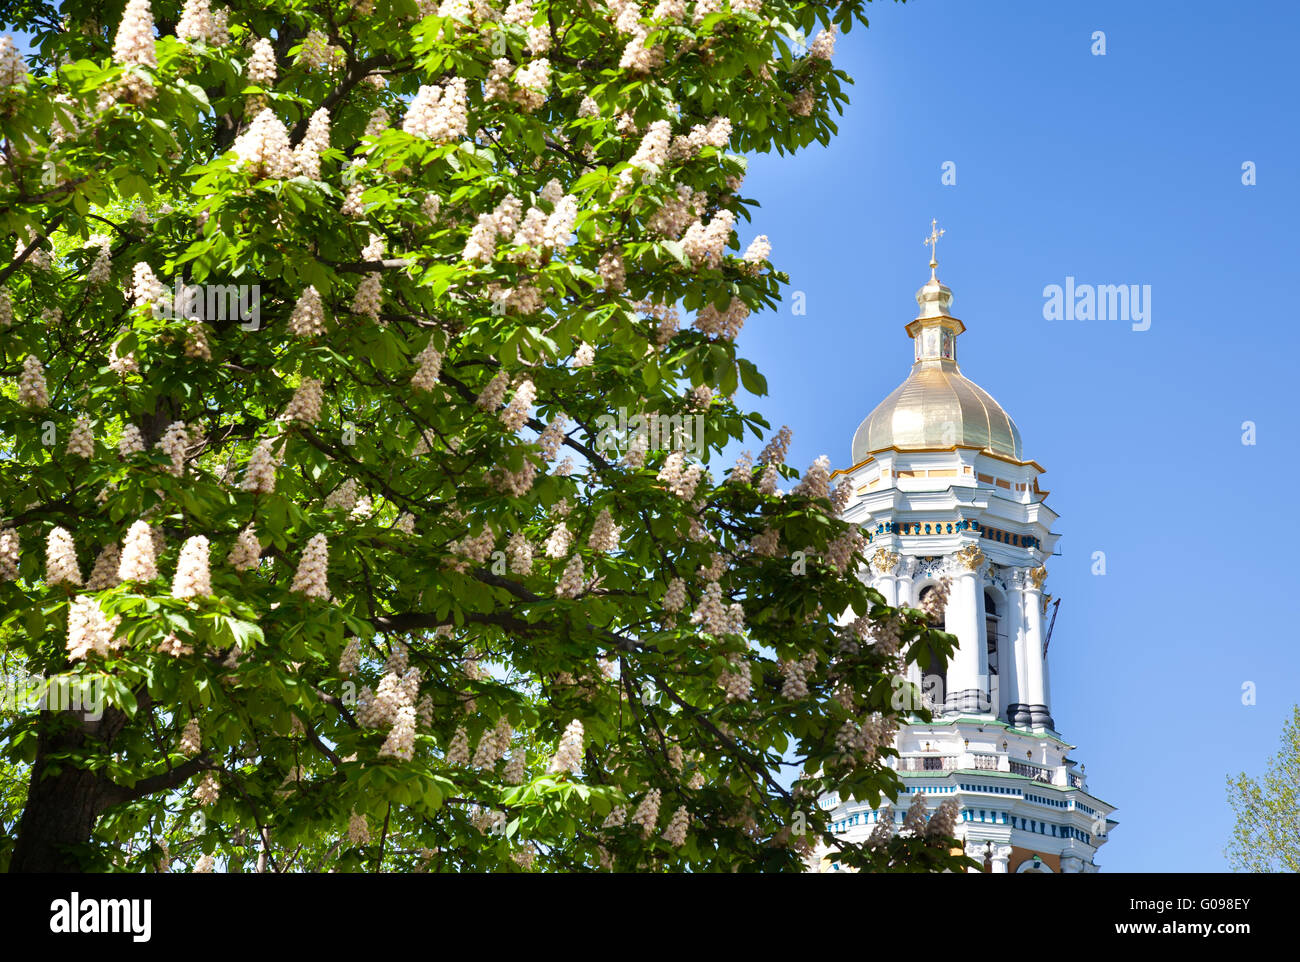 Kiev Pechersk Lavra monastery and chesnut tree in blossom Stock Photo